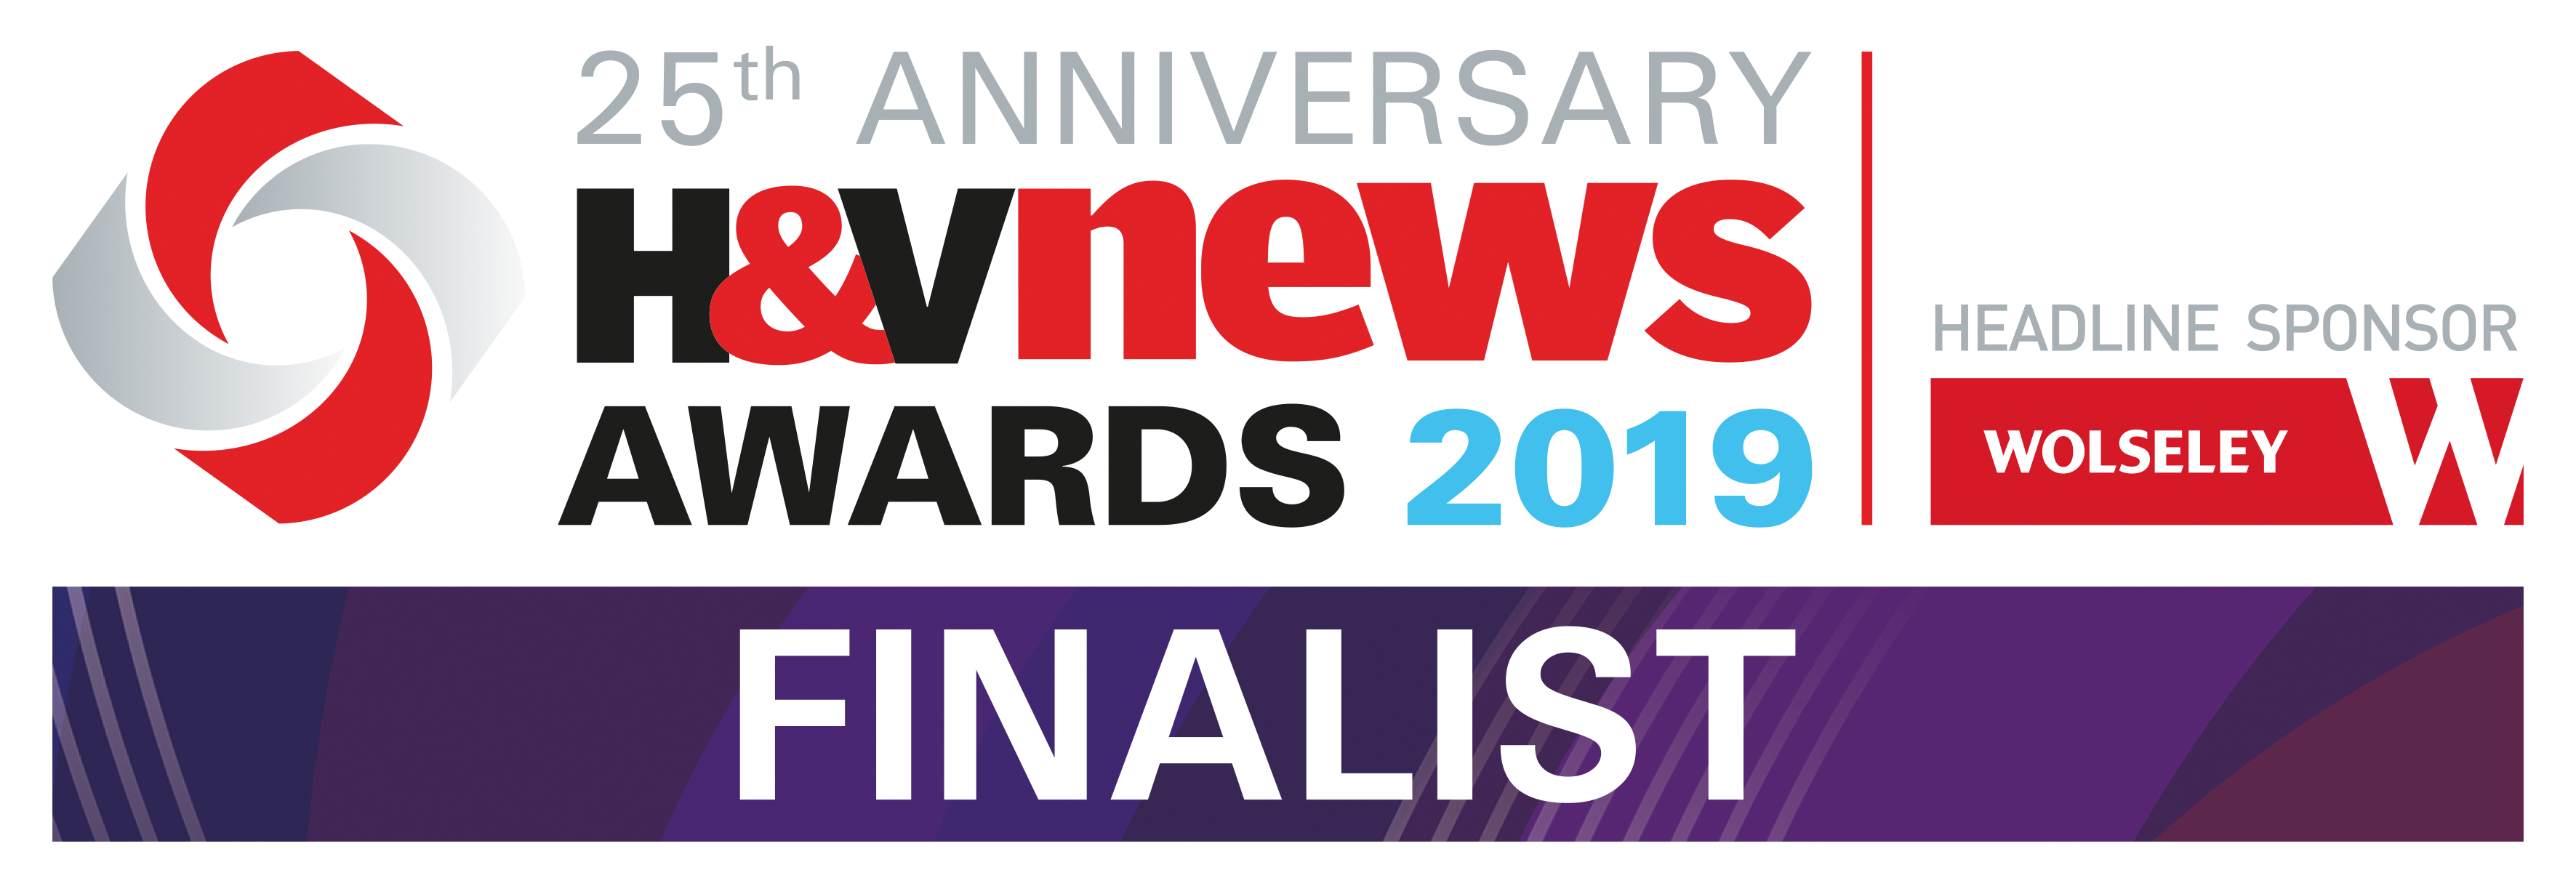 H&V News 2019 finalist logo